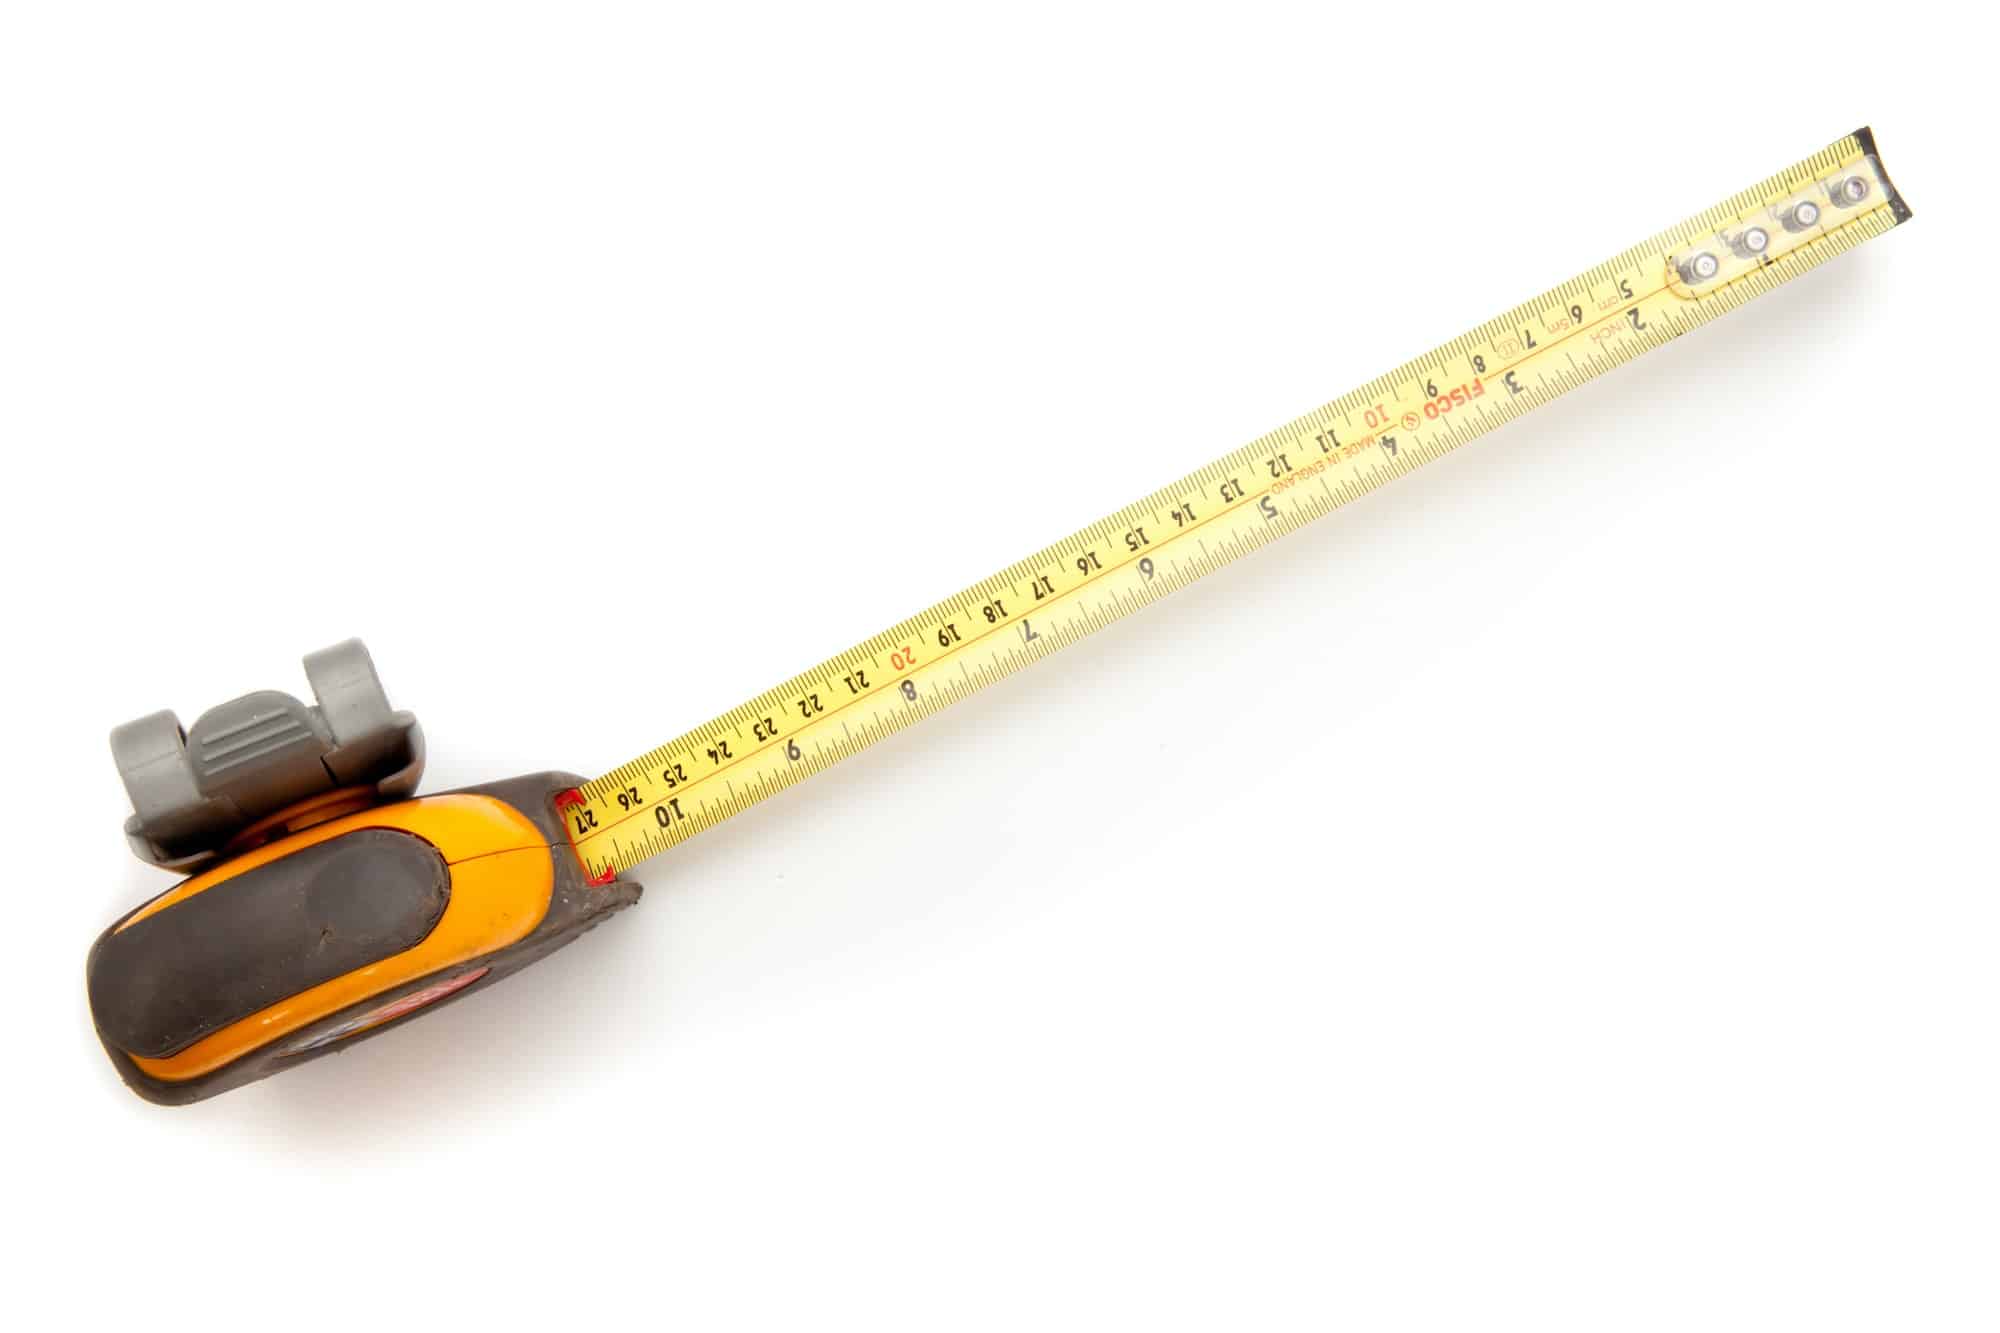 Industrial measuring tape